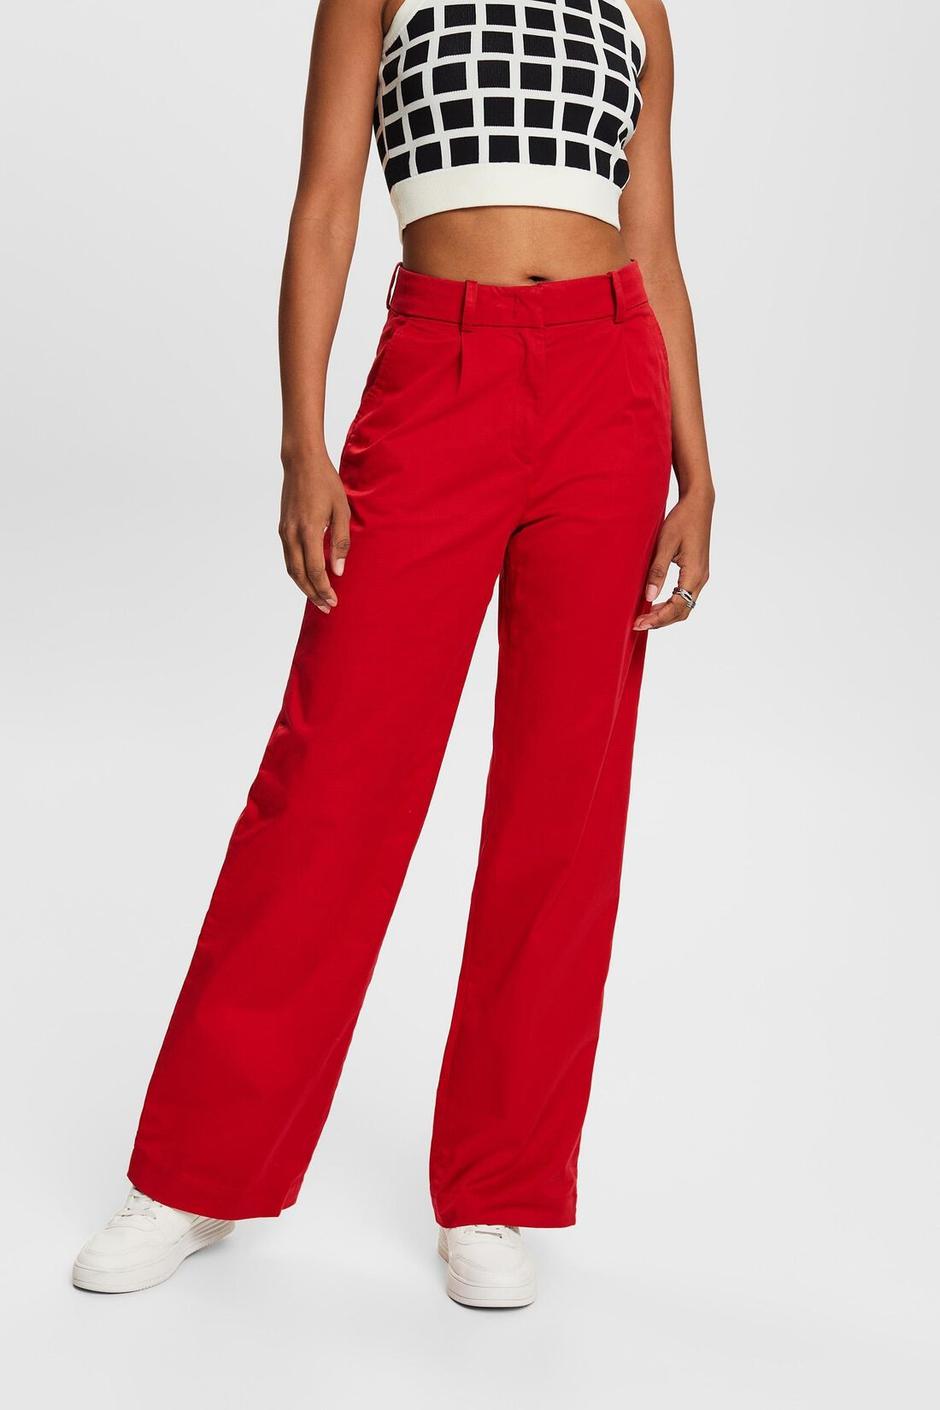 Foto: Esprit, crvene hlače širokog kroja (89,99 eura) | Autor: 